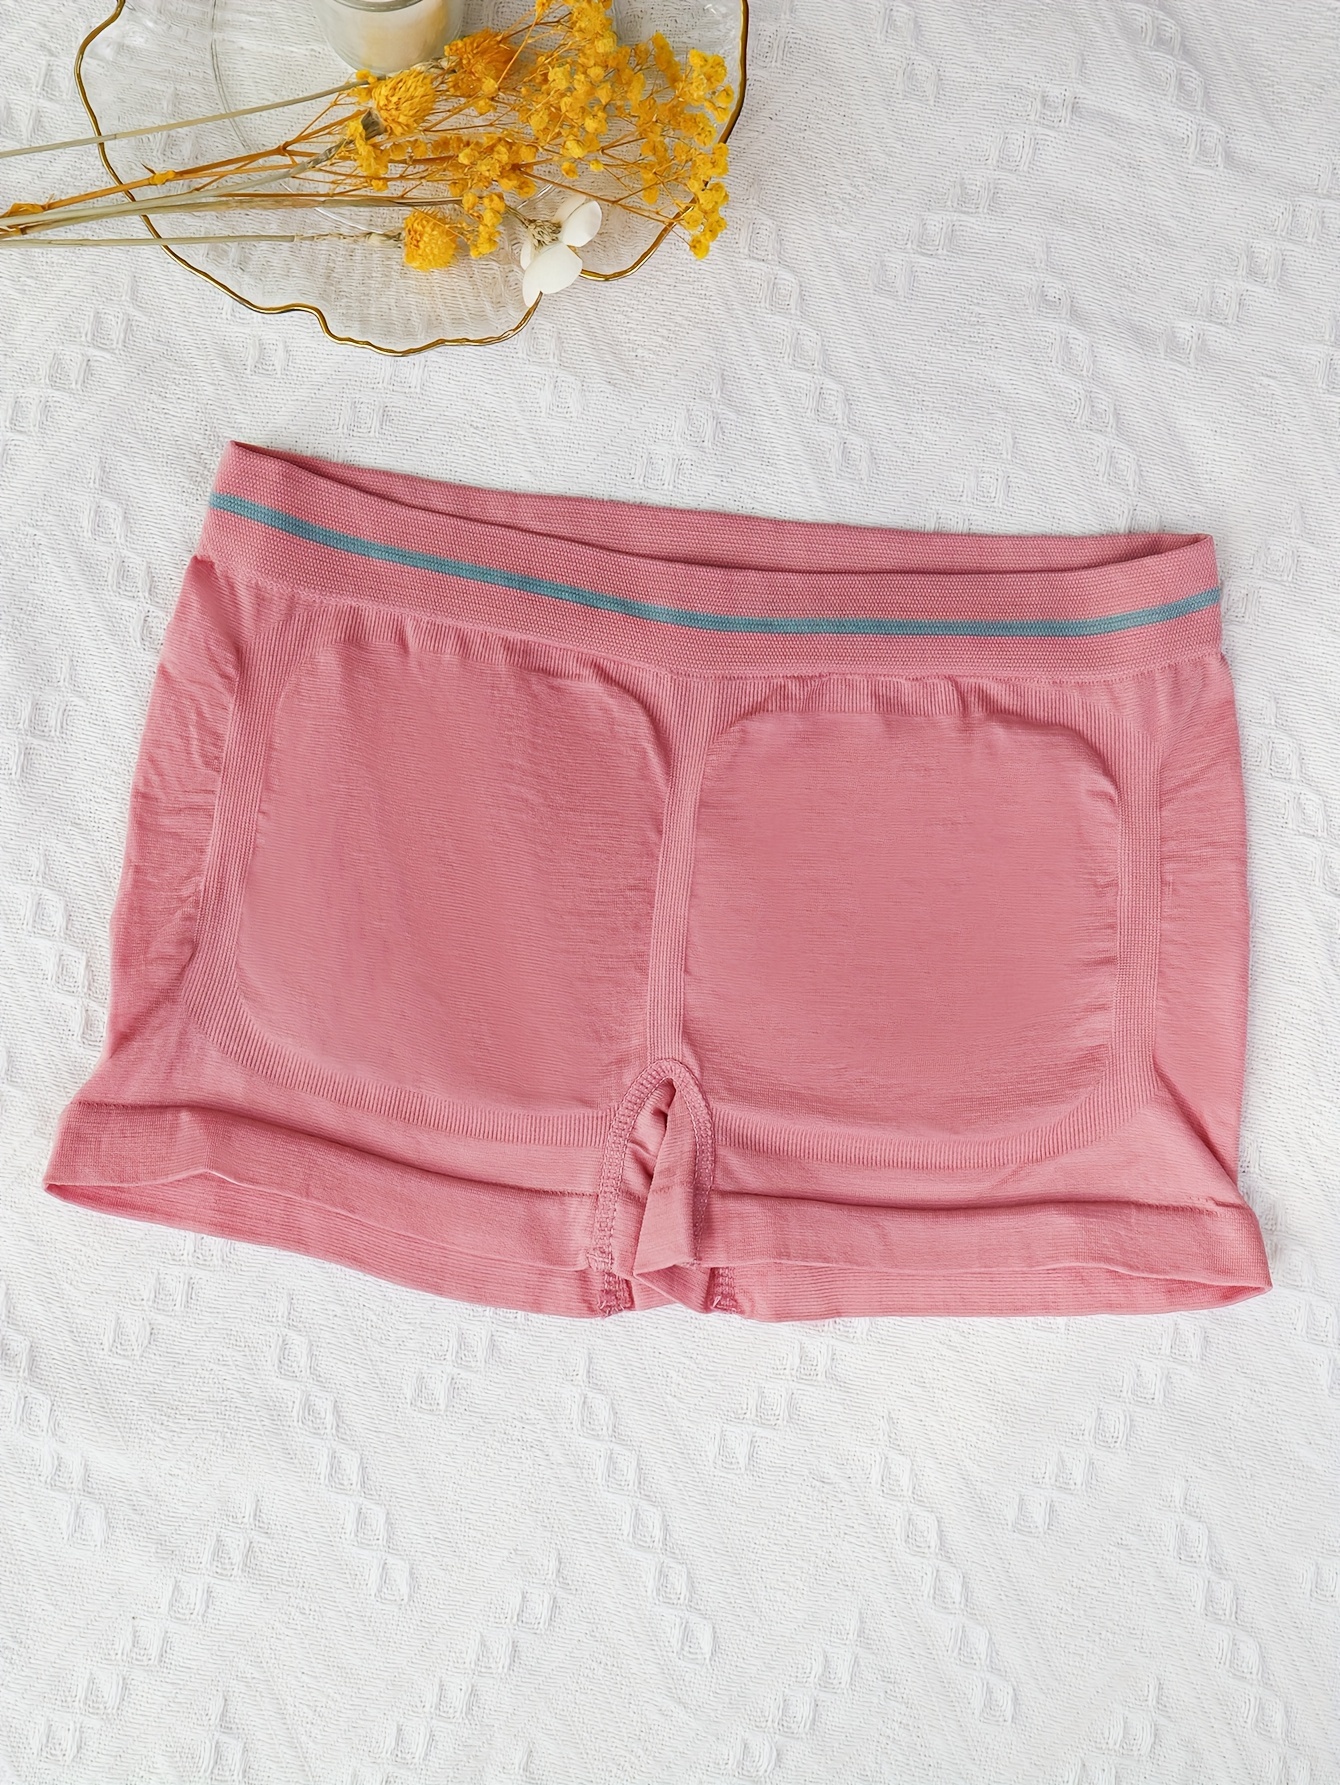 4Pcs Simple Boyshort Panty, Heart Ring Print Stretchy Valentine's Day  Intimates Boxer Shorts, Women's Lingerie & Underwear